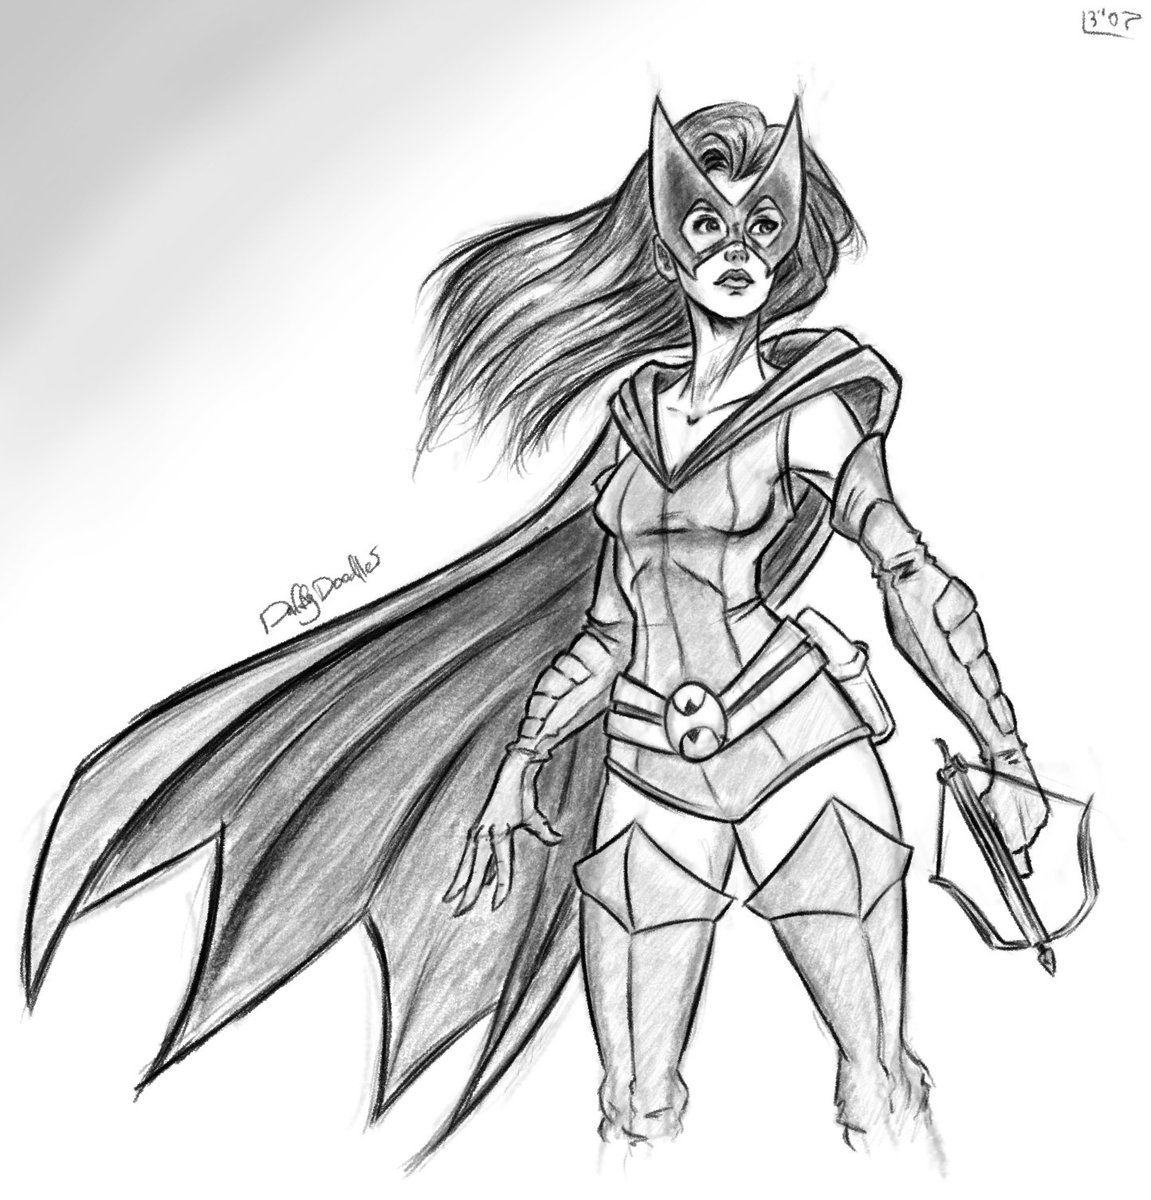 The huntress 
#drawing #sketch #illustration #doodle #art #superhero #dccomic